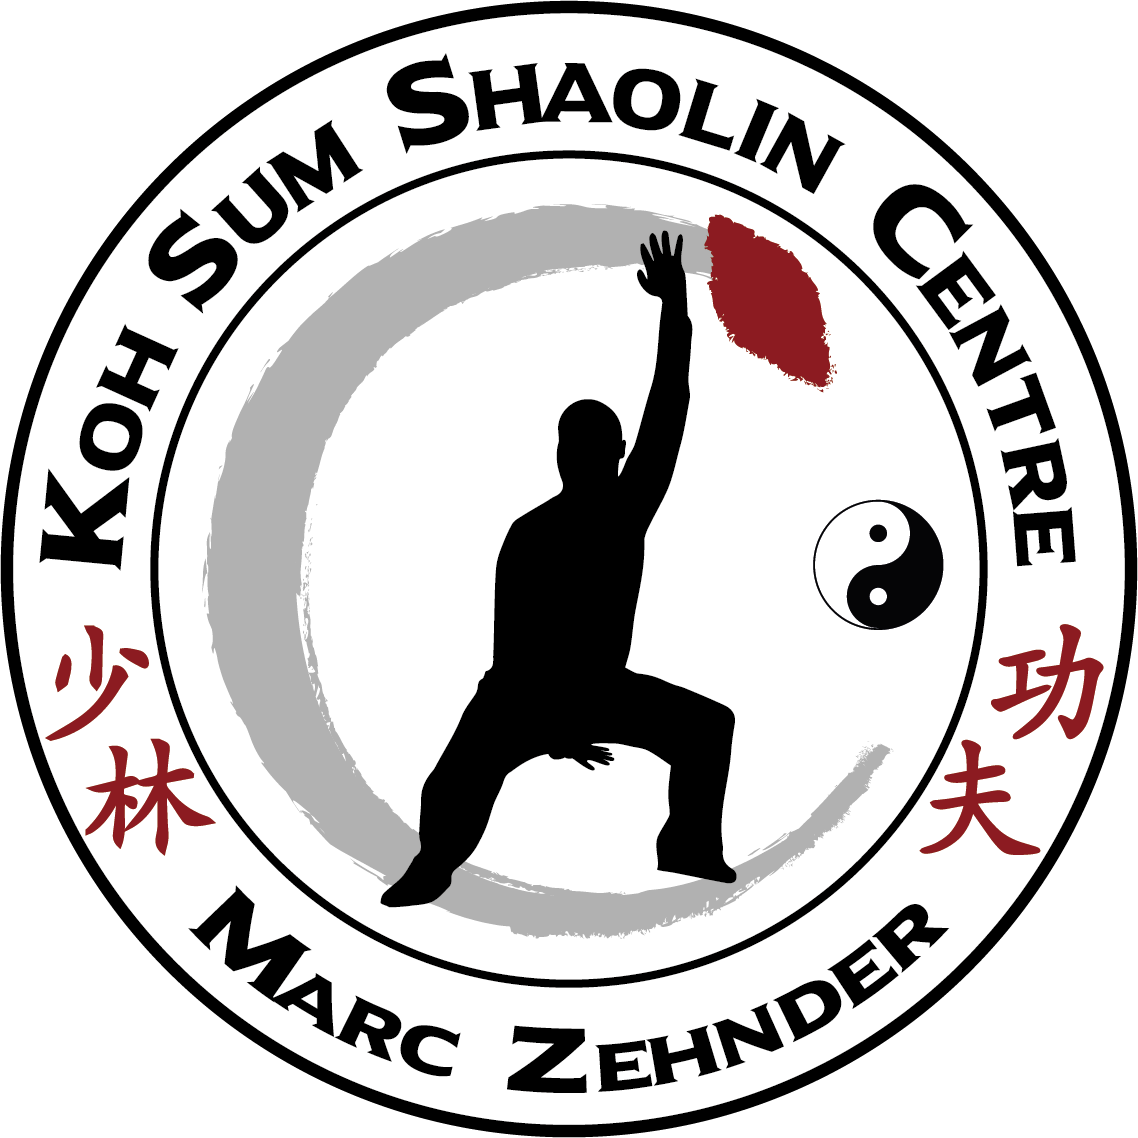 Koh Sum Shaolin Centre Teufen - Marc Zehnder